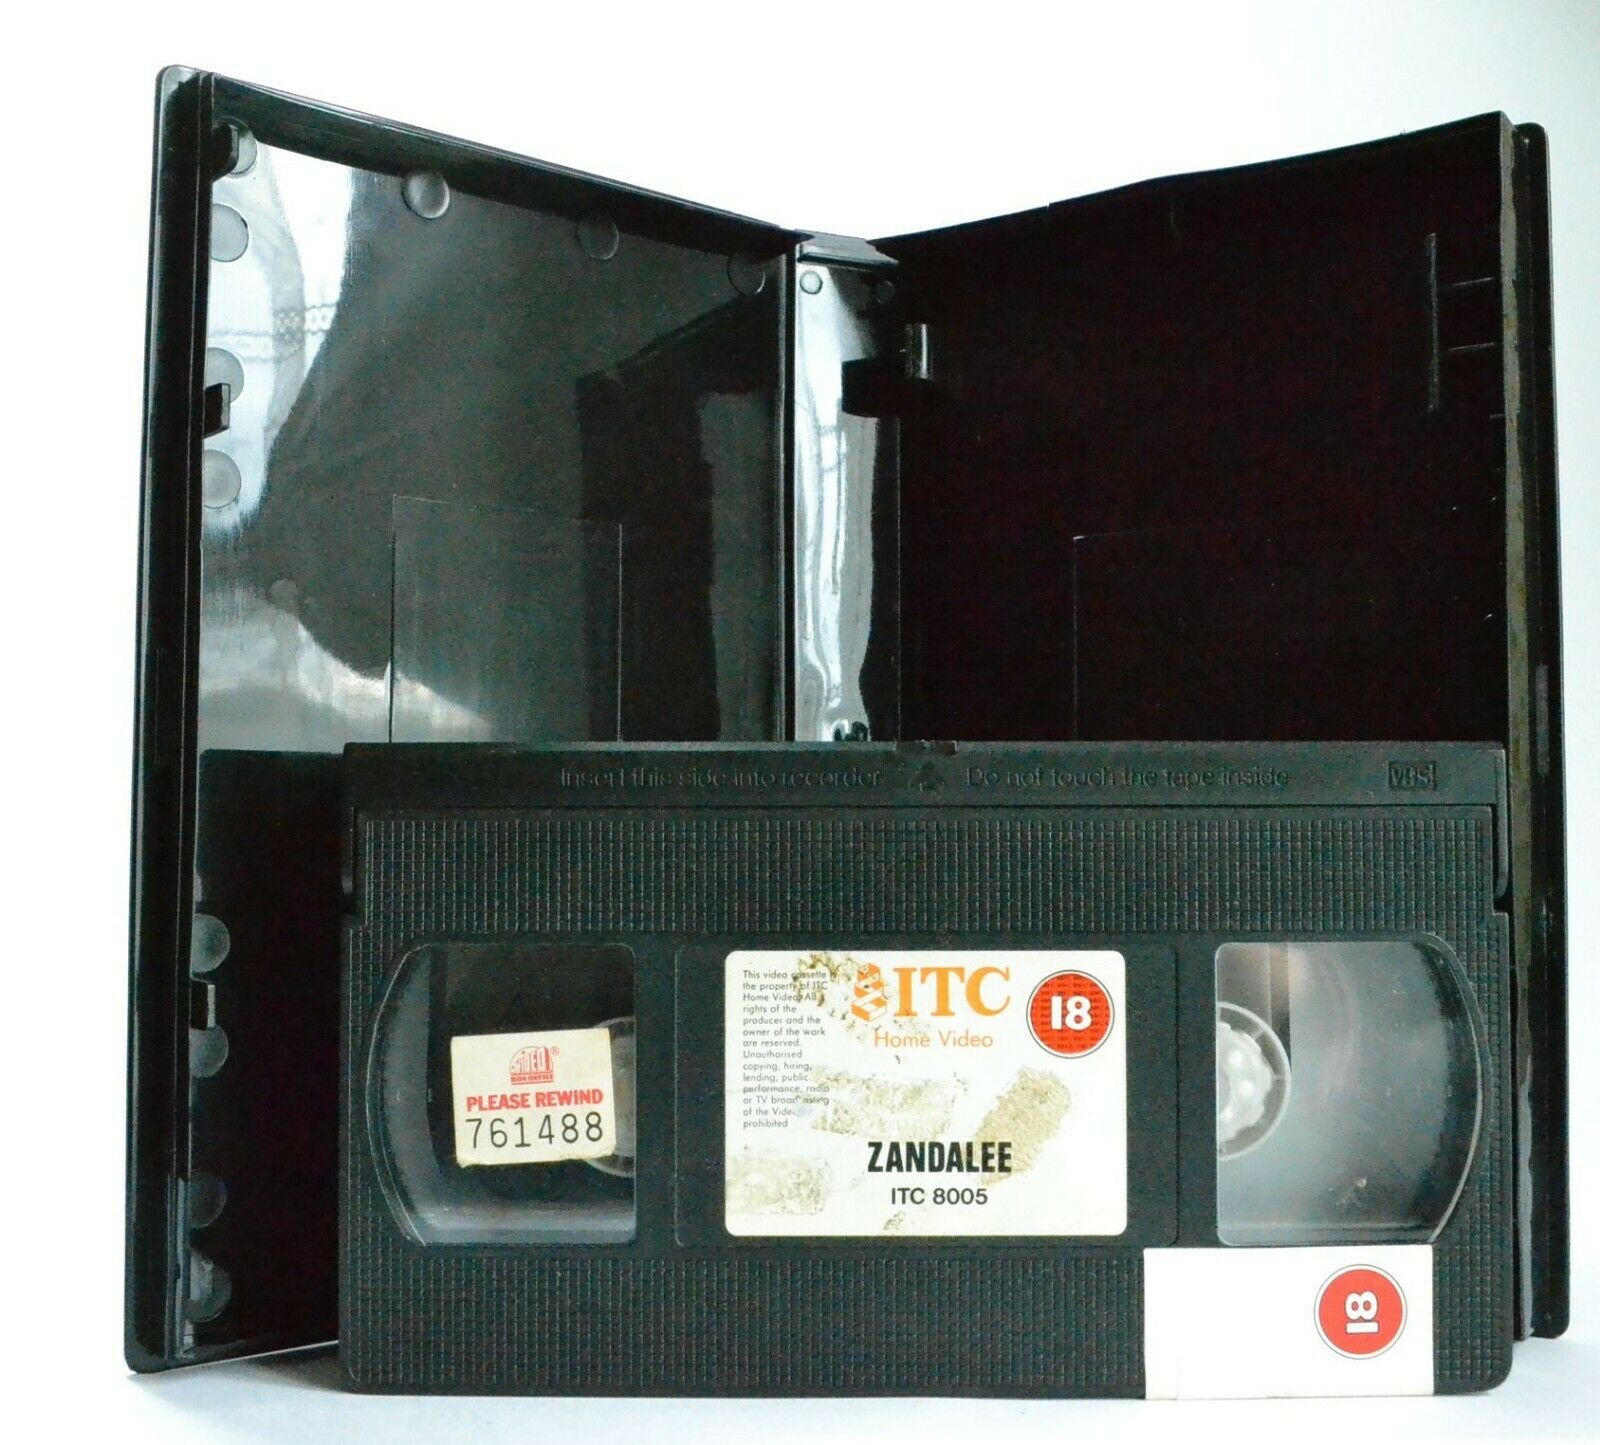 Zandalee: She's Irresistible - Erotic Thriller (1991) - Nicolas Cage - Pal VHS-